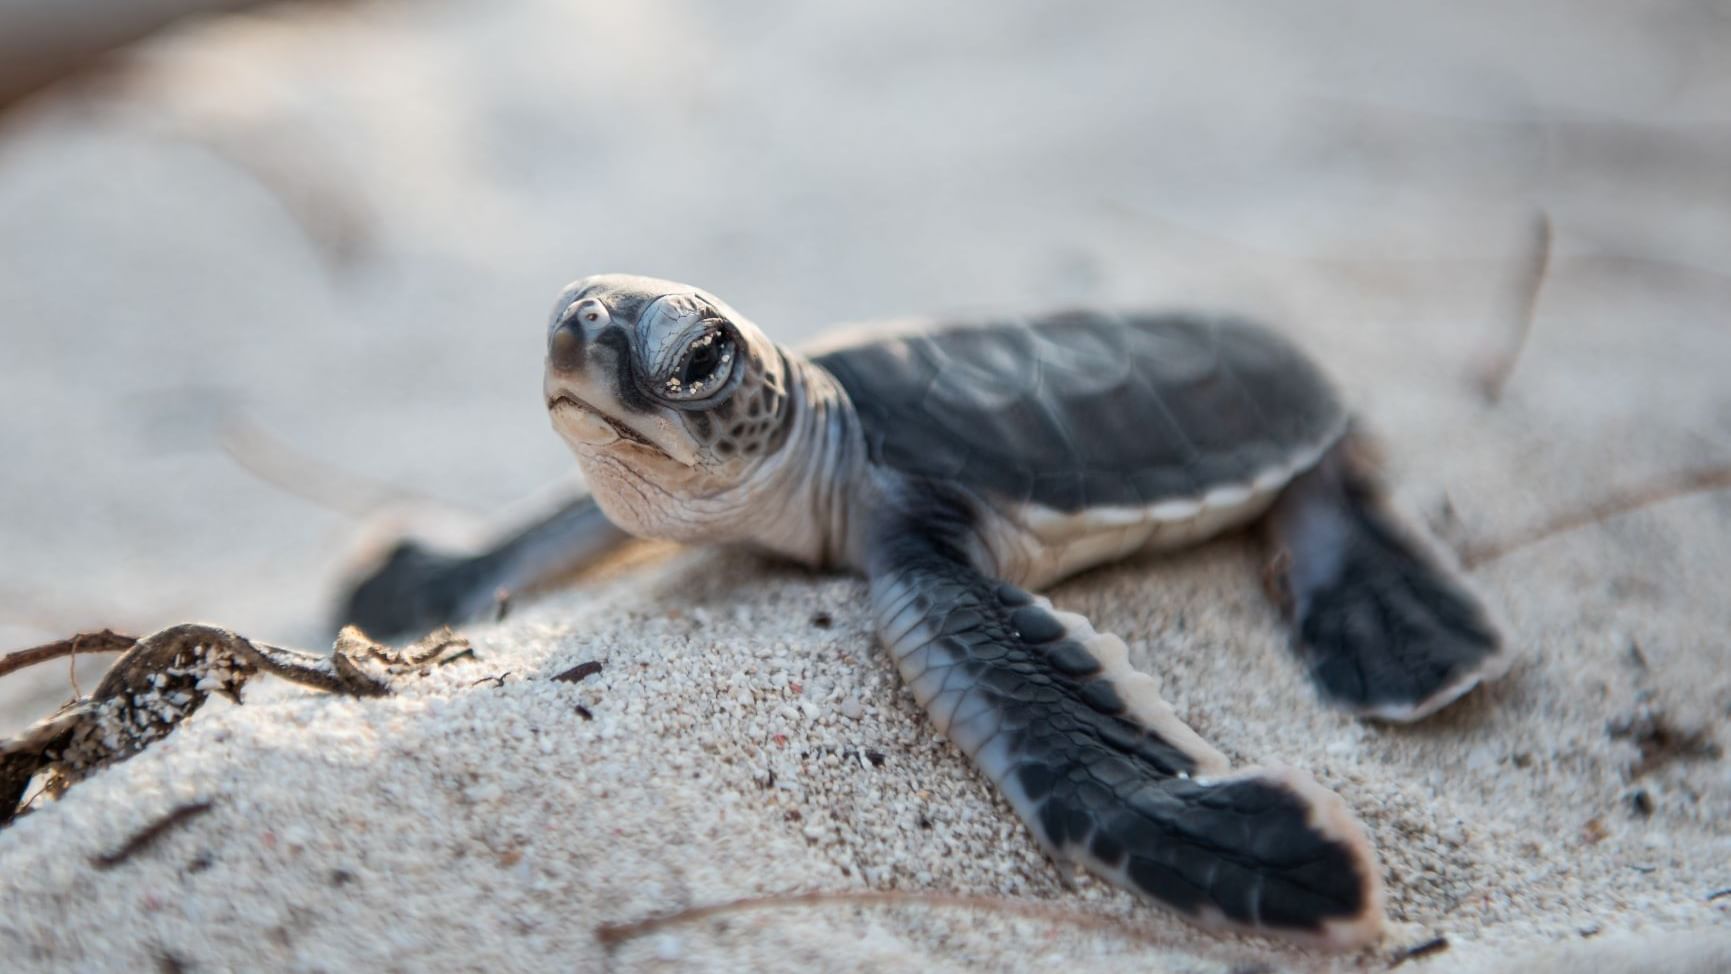 Closeup of a baby turtle inshore near Heron Island Resort